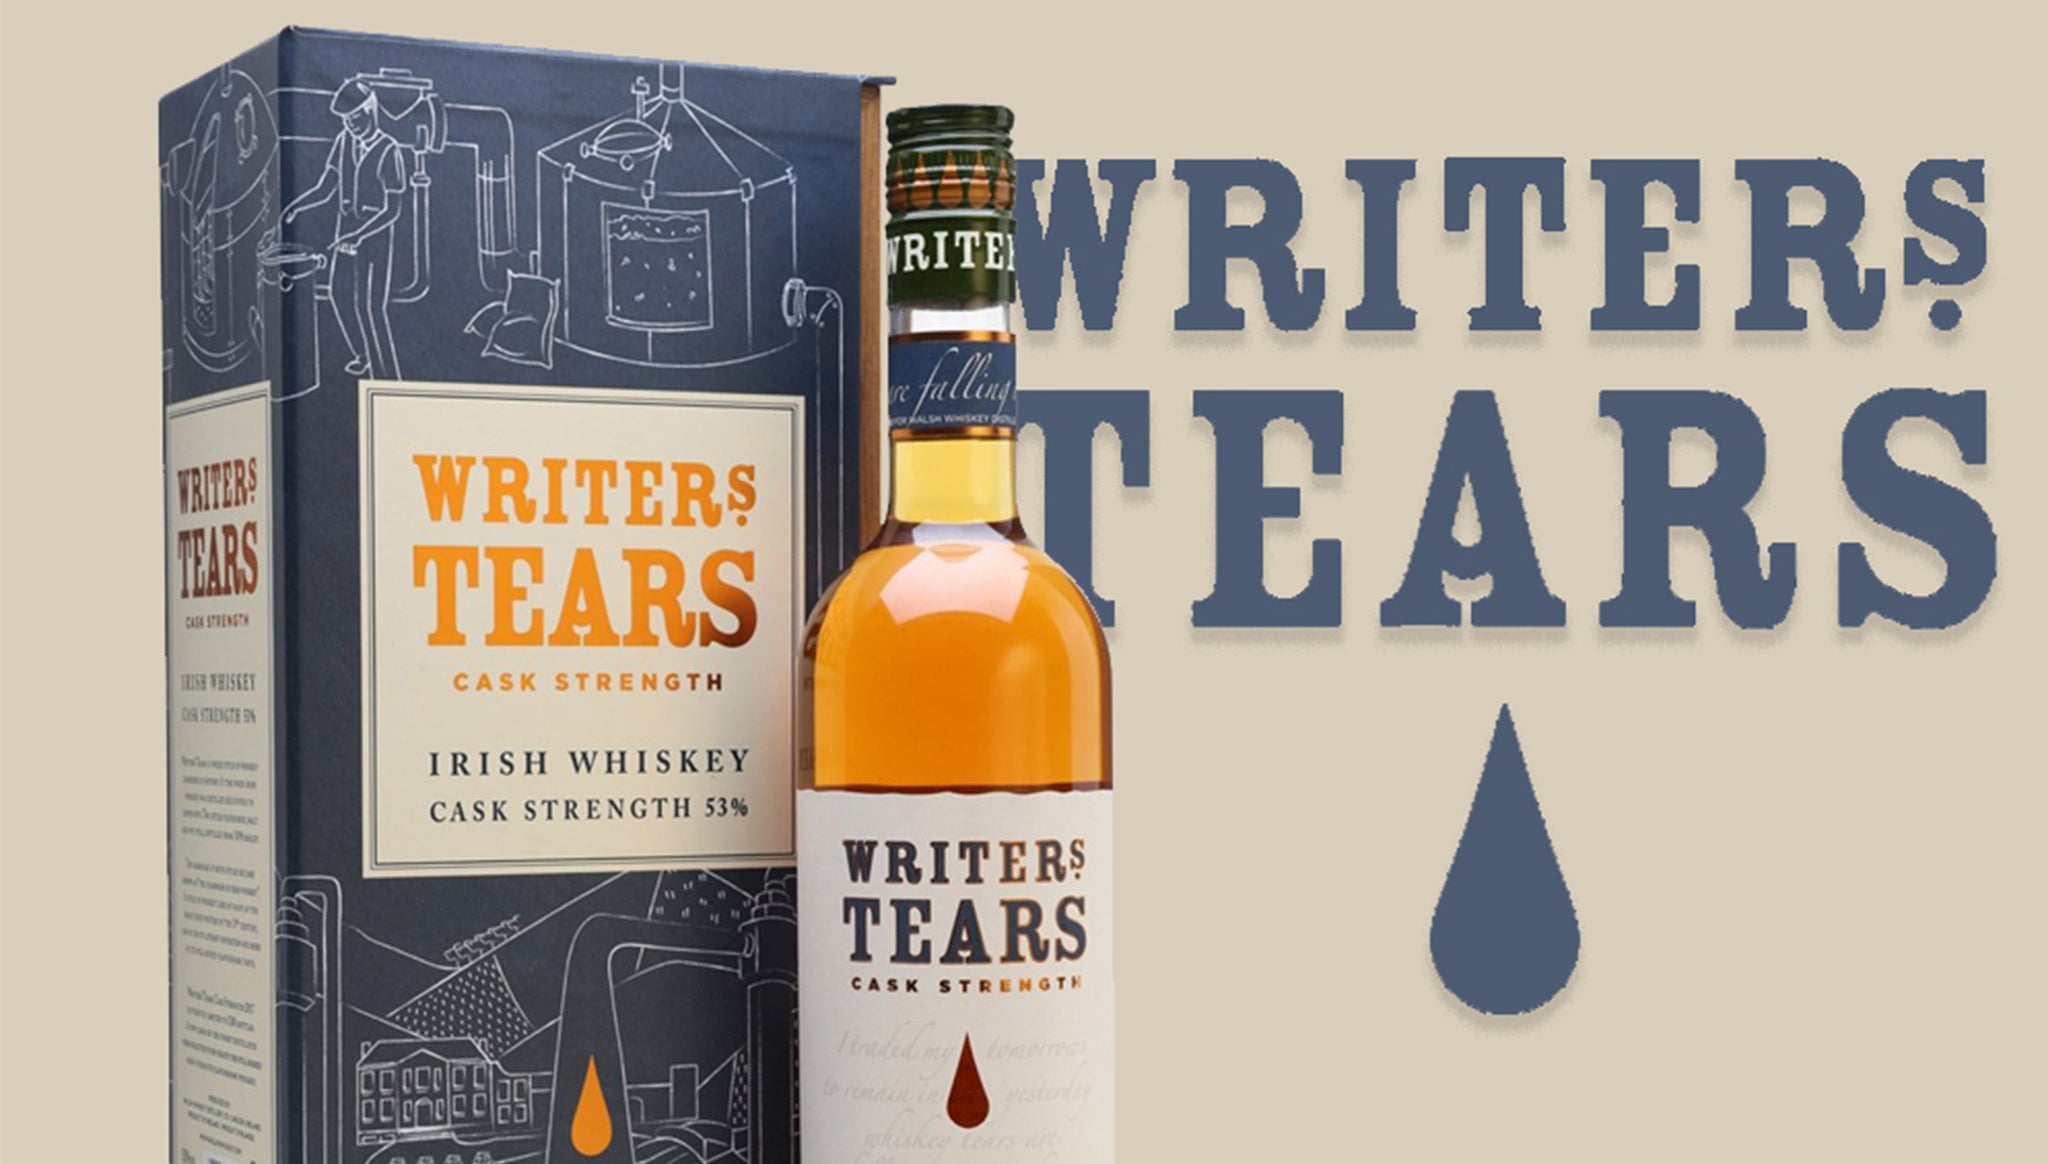 New Arrival - Writers' Tears Irish Whiskey